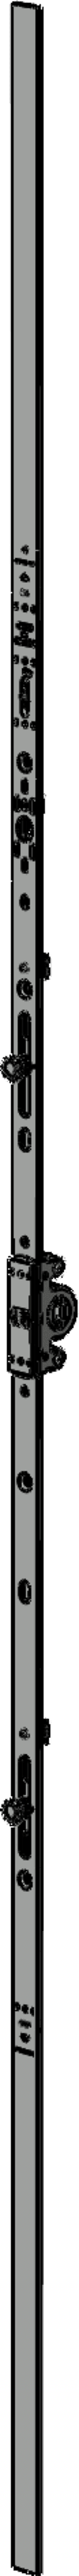 Winkhaus Getriebe GAM.1400-2